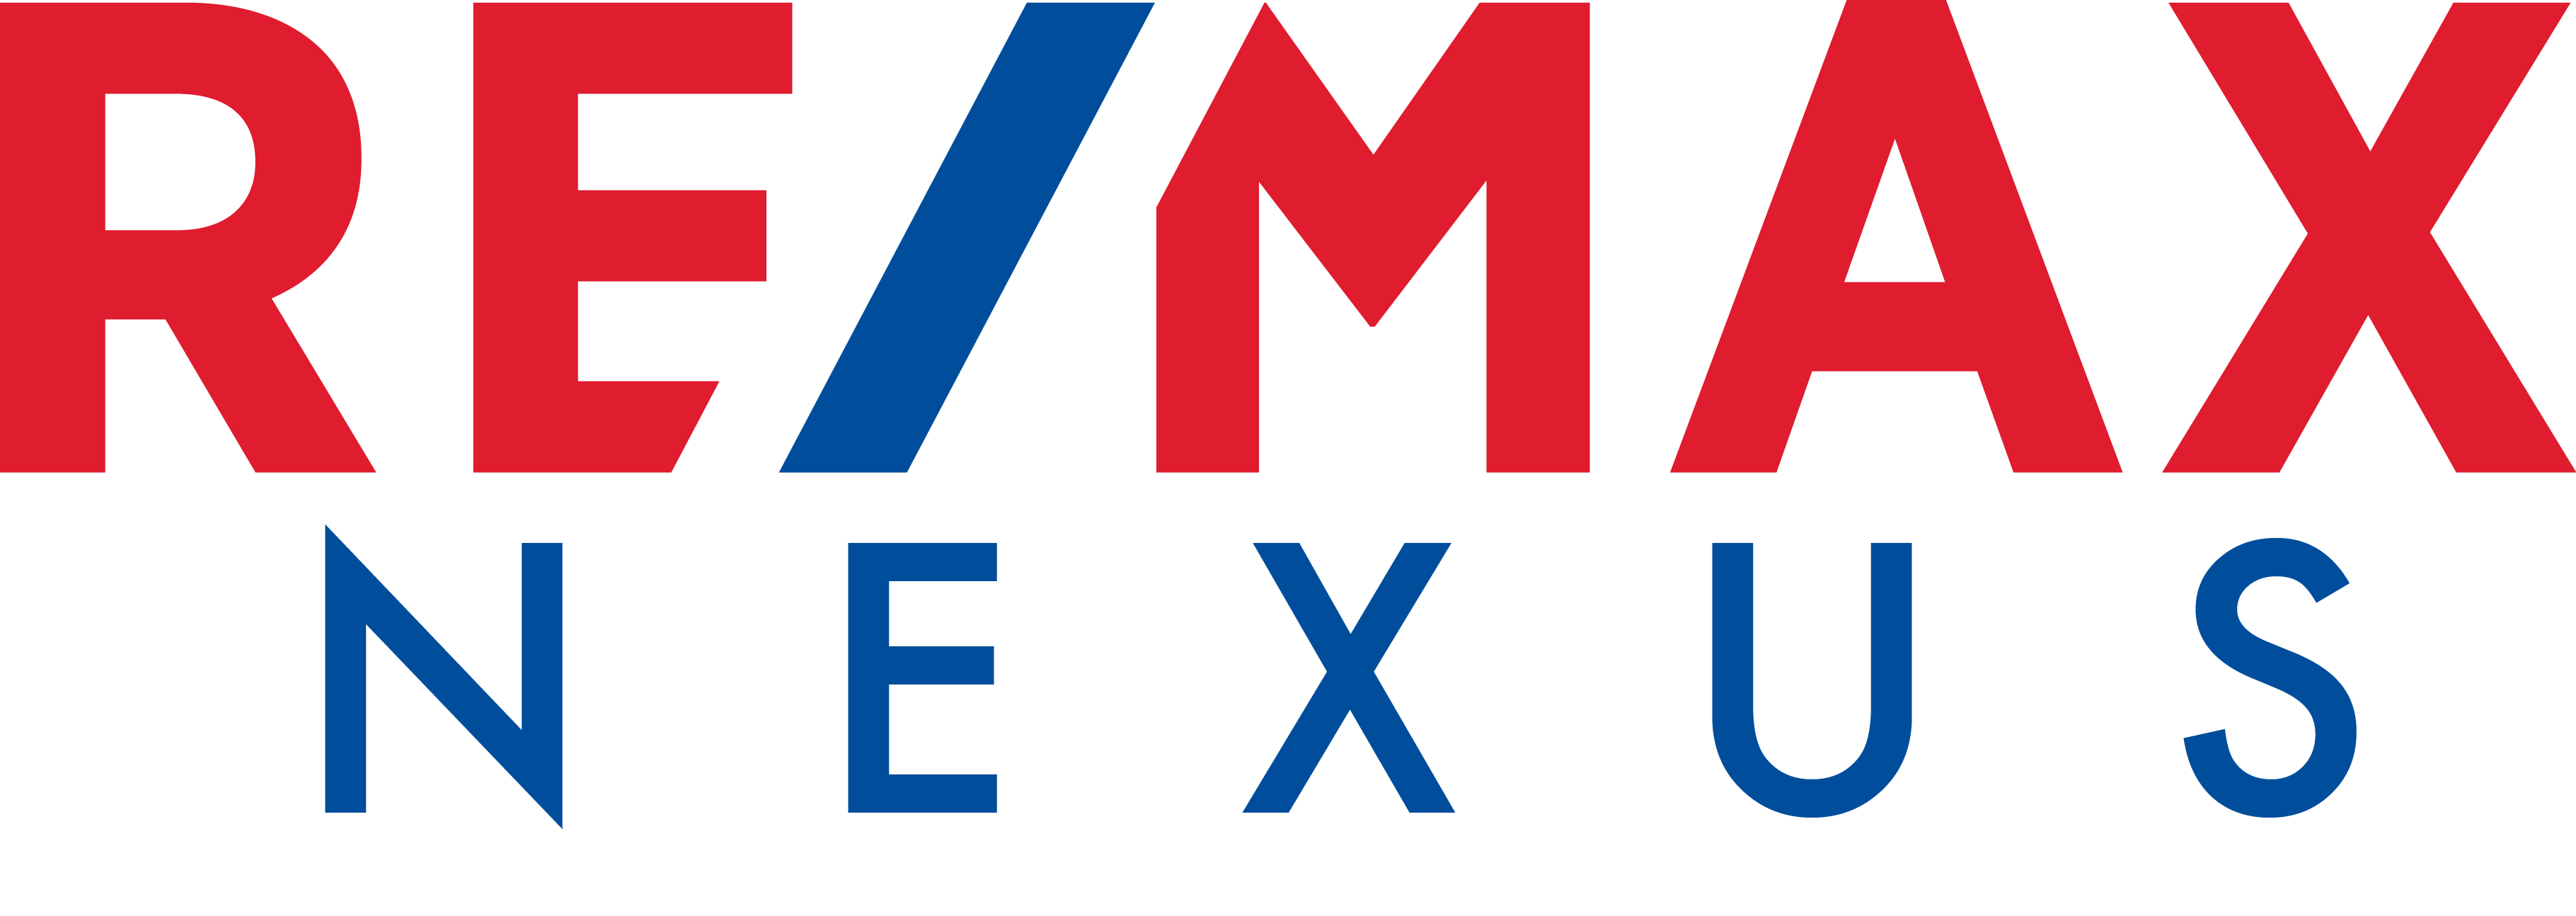 RE/MAX Nexus